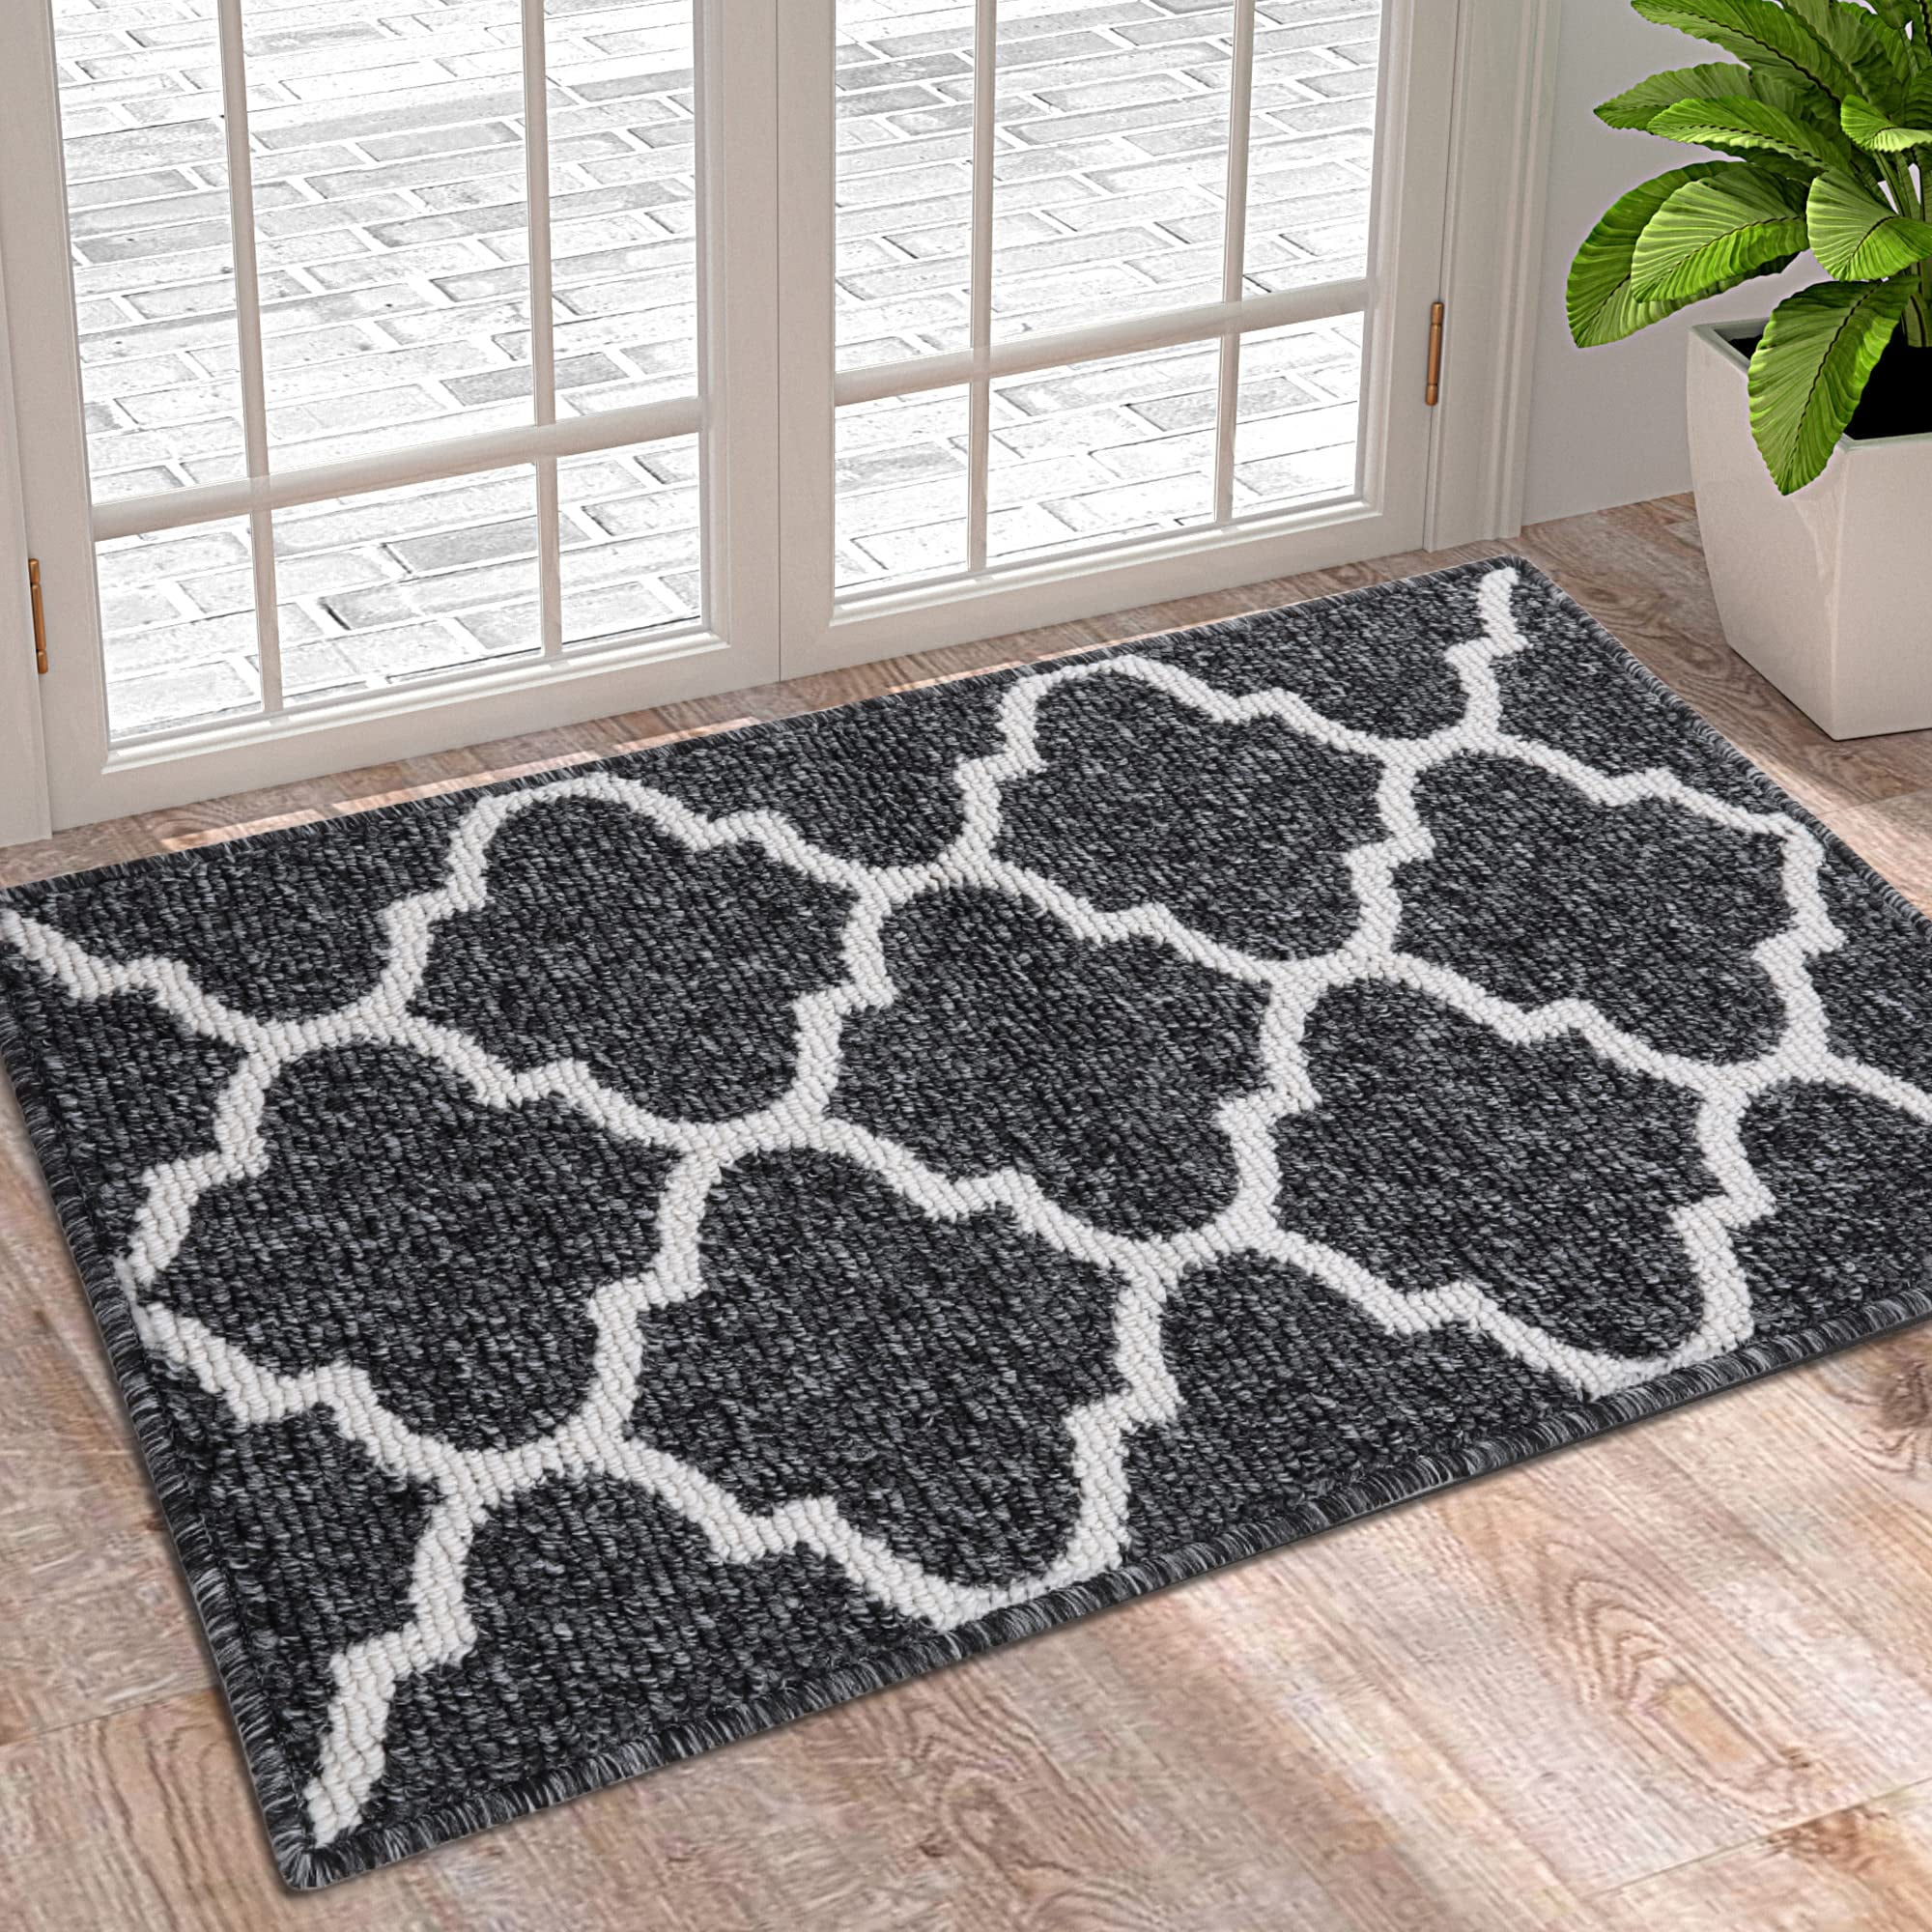 Details about   Carvapet 2 Piece Non-Slip Kitchen Mat Rubber Backing Doormat Runner Rug Set Coz 